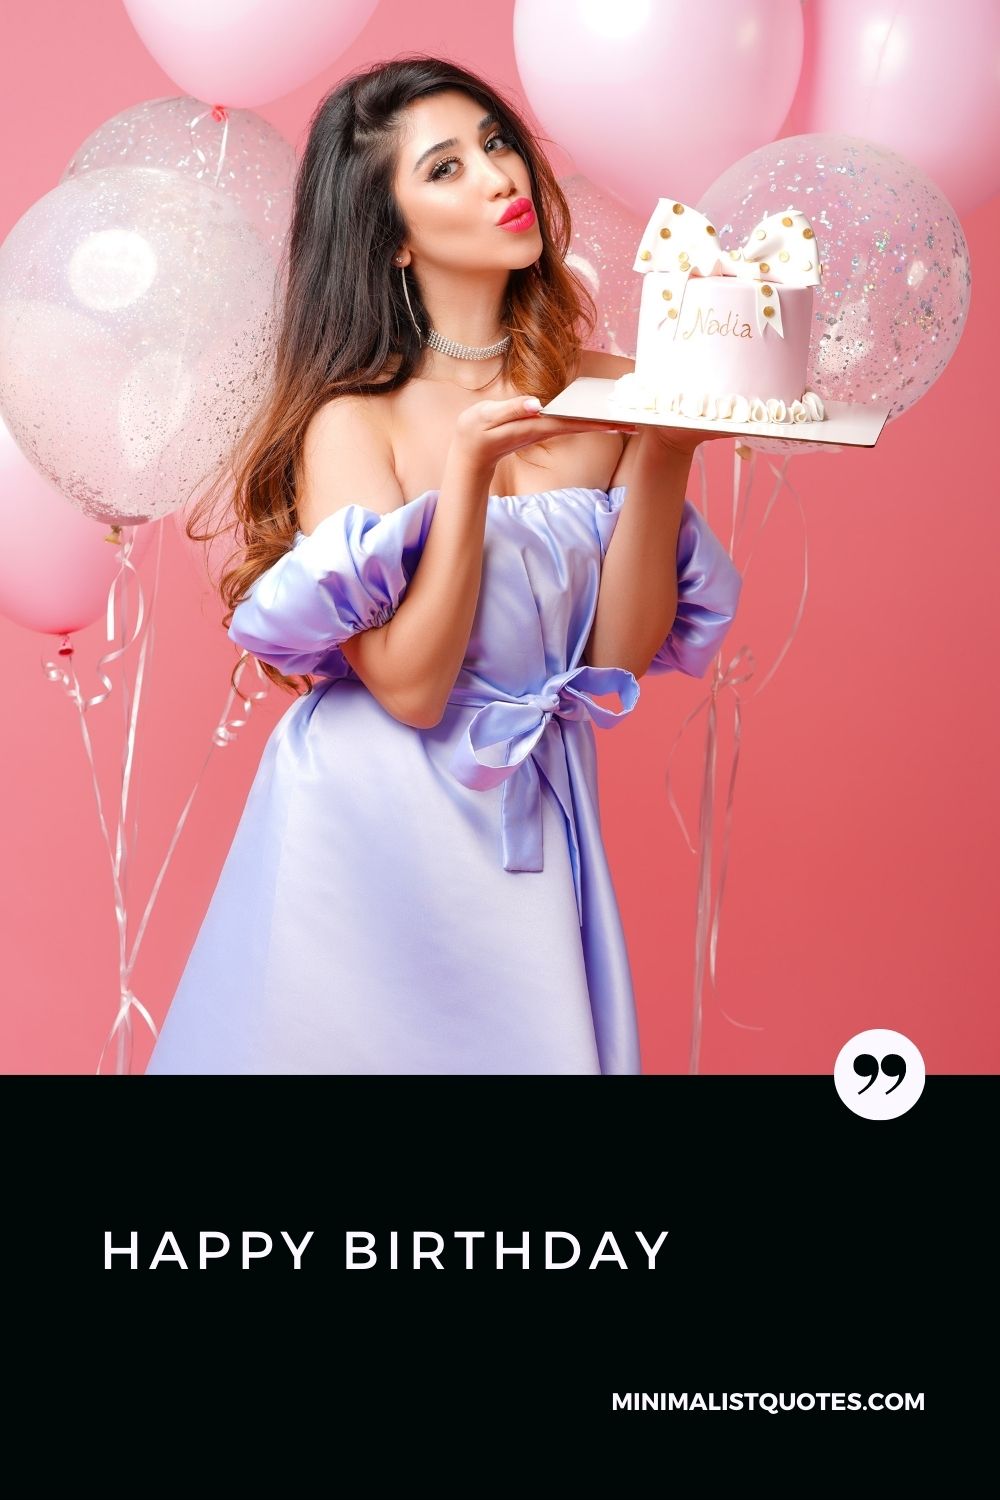 Happy Birthday Wish & Digital Card Image: #cakeballoons